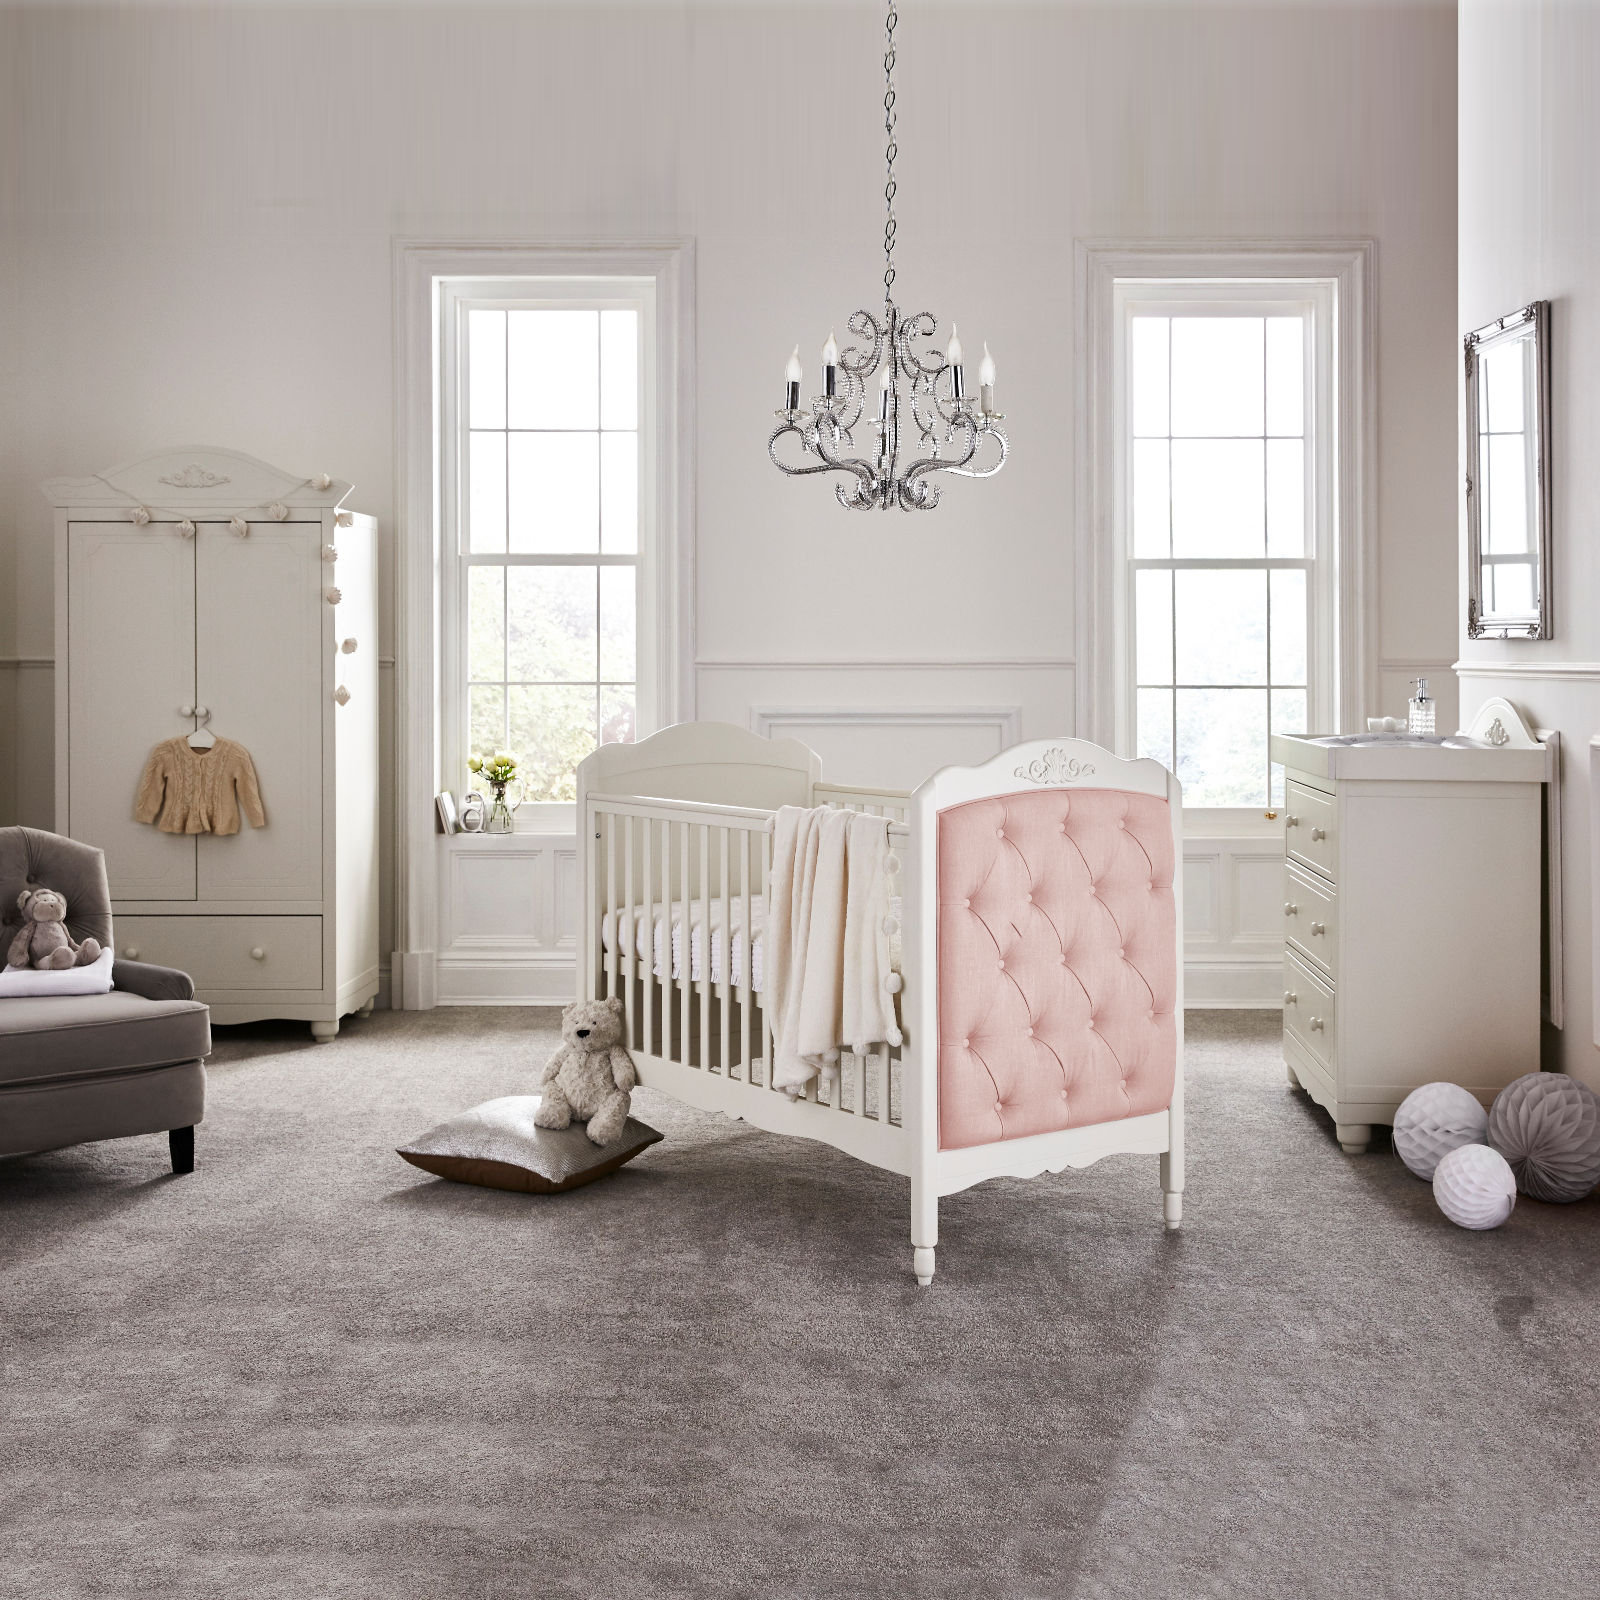 Mee-Go Epernay Cot Bed 4 Piece Nursery Furniture Set - Pink